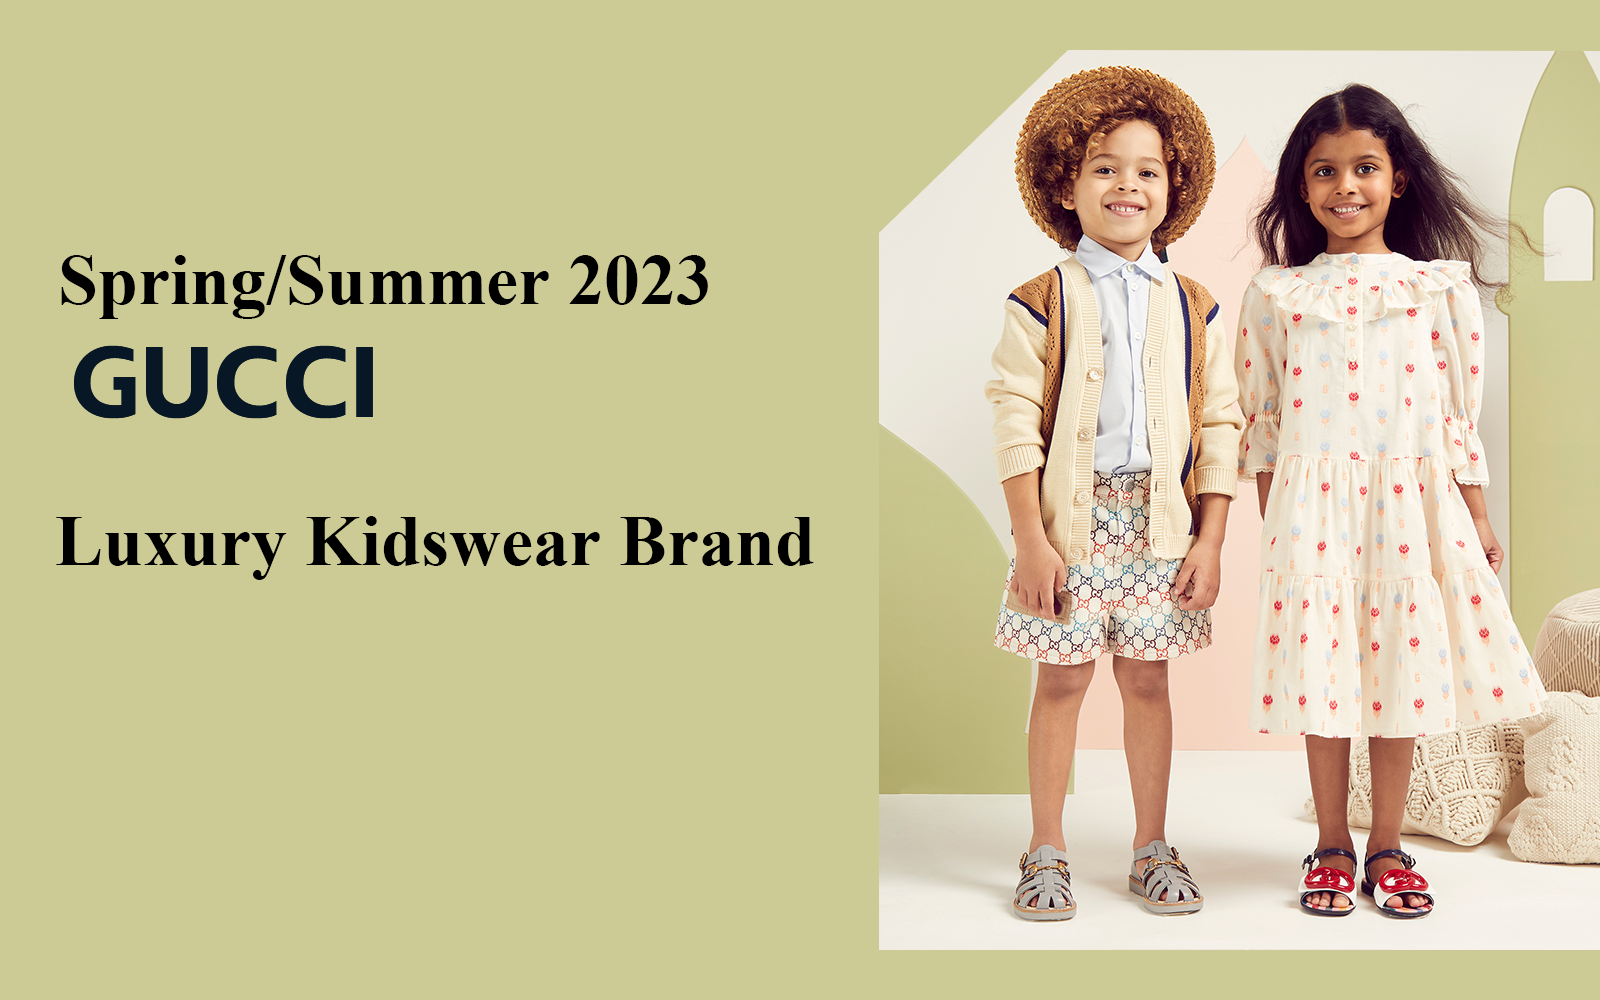 Retro Fashion -- The Analysis of Gucci The Luxury Kidswear Brand